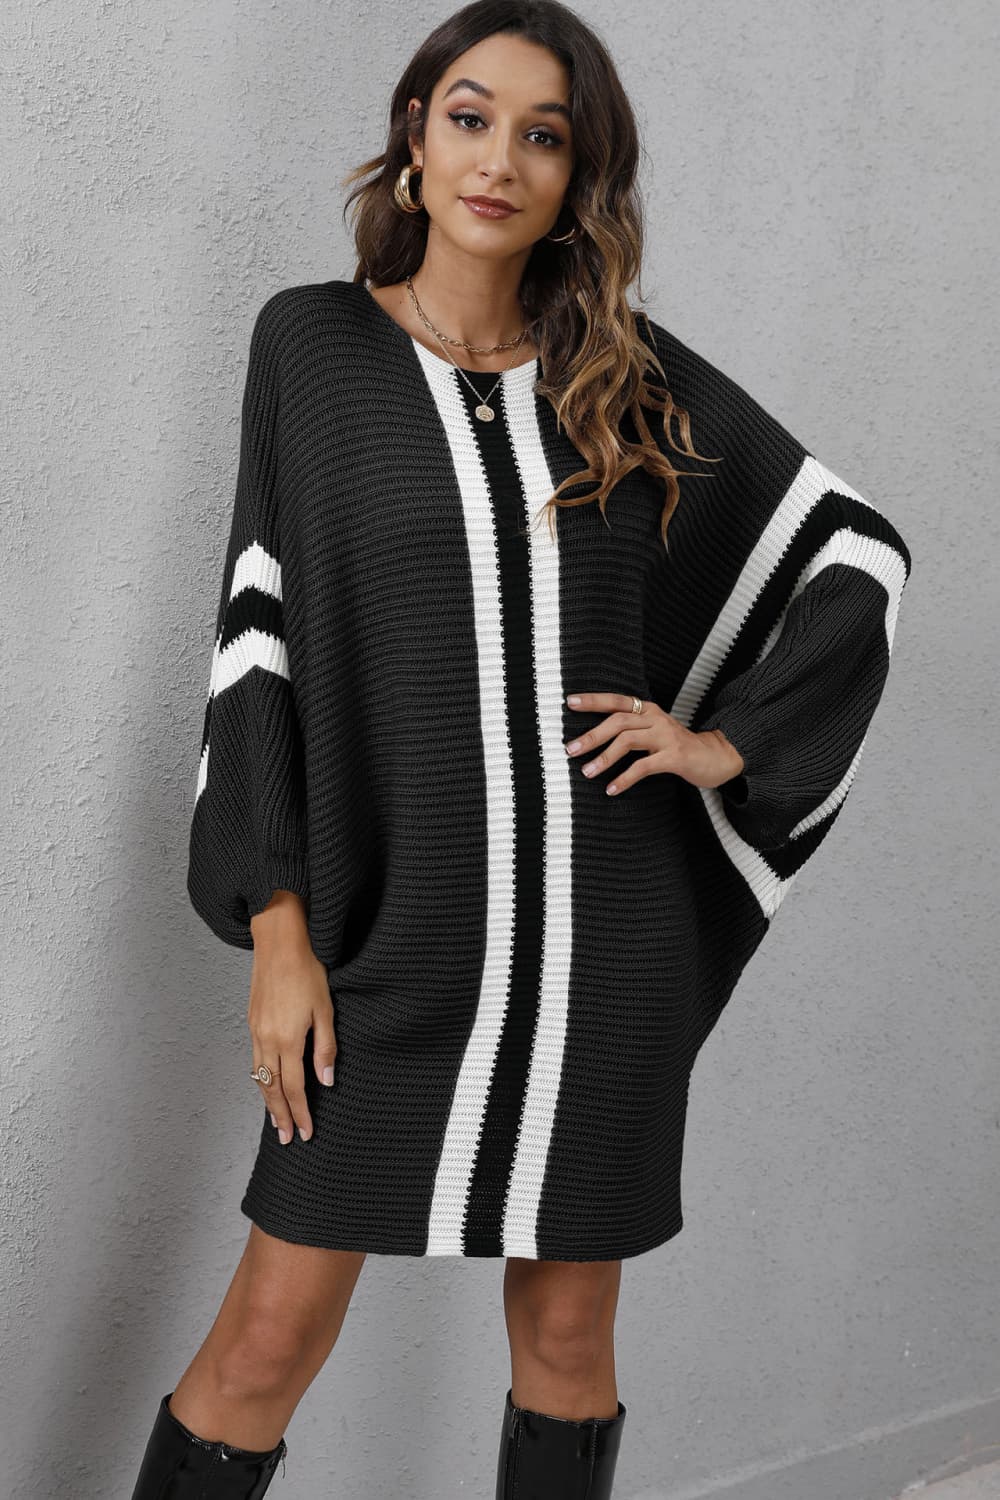 Ribbed Round Neck Long Sleeve Sweater Dress - TiffanyzKlozet